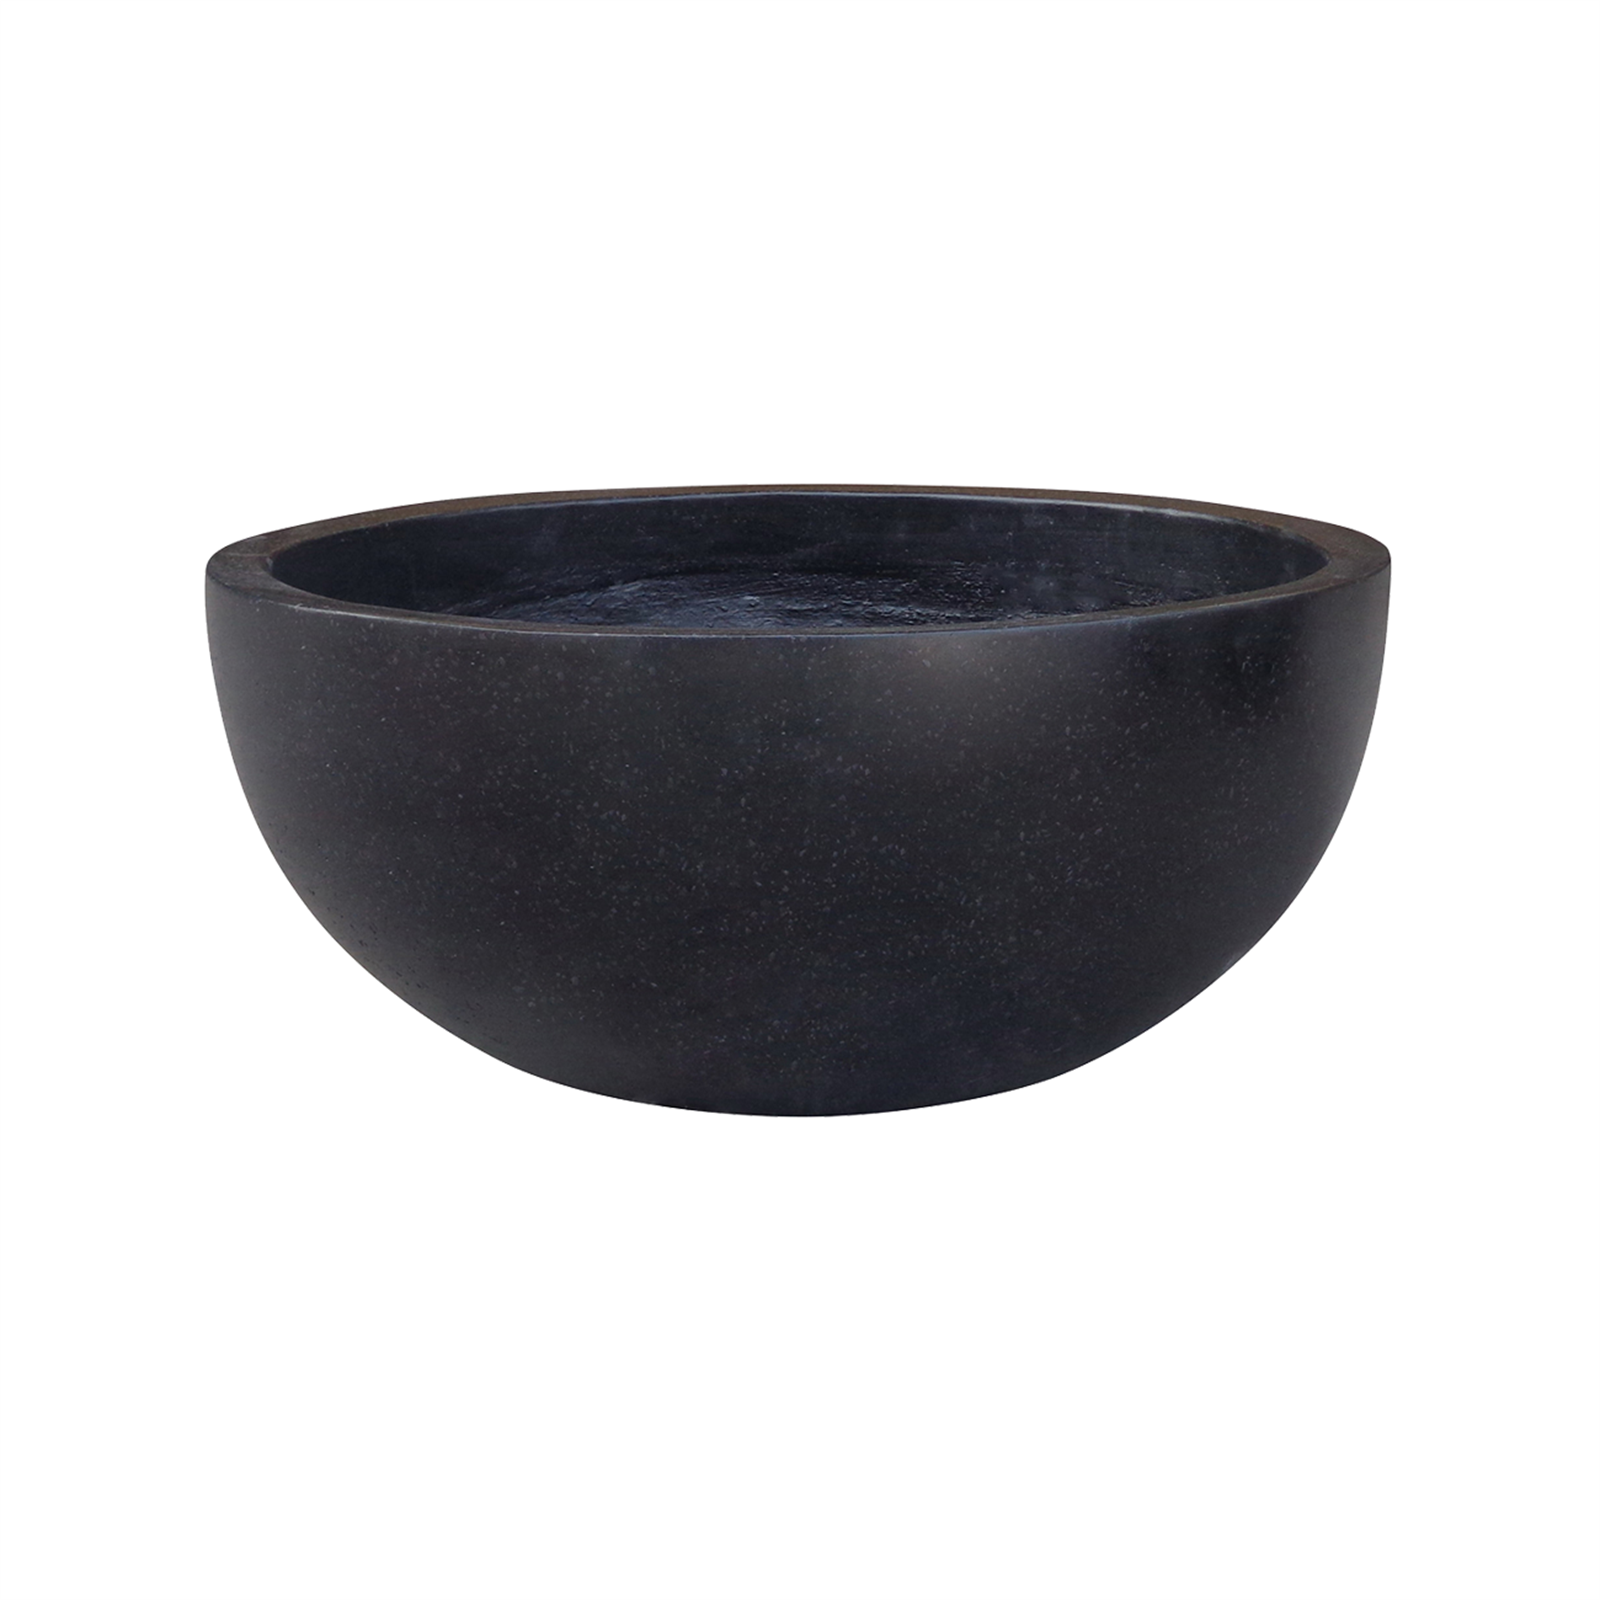 Northcote Pottery Black Precinct Lite Omni Bowl - Medium